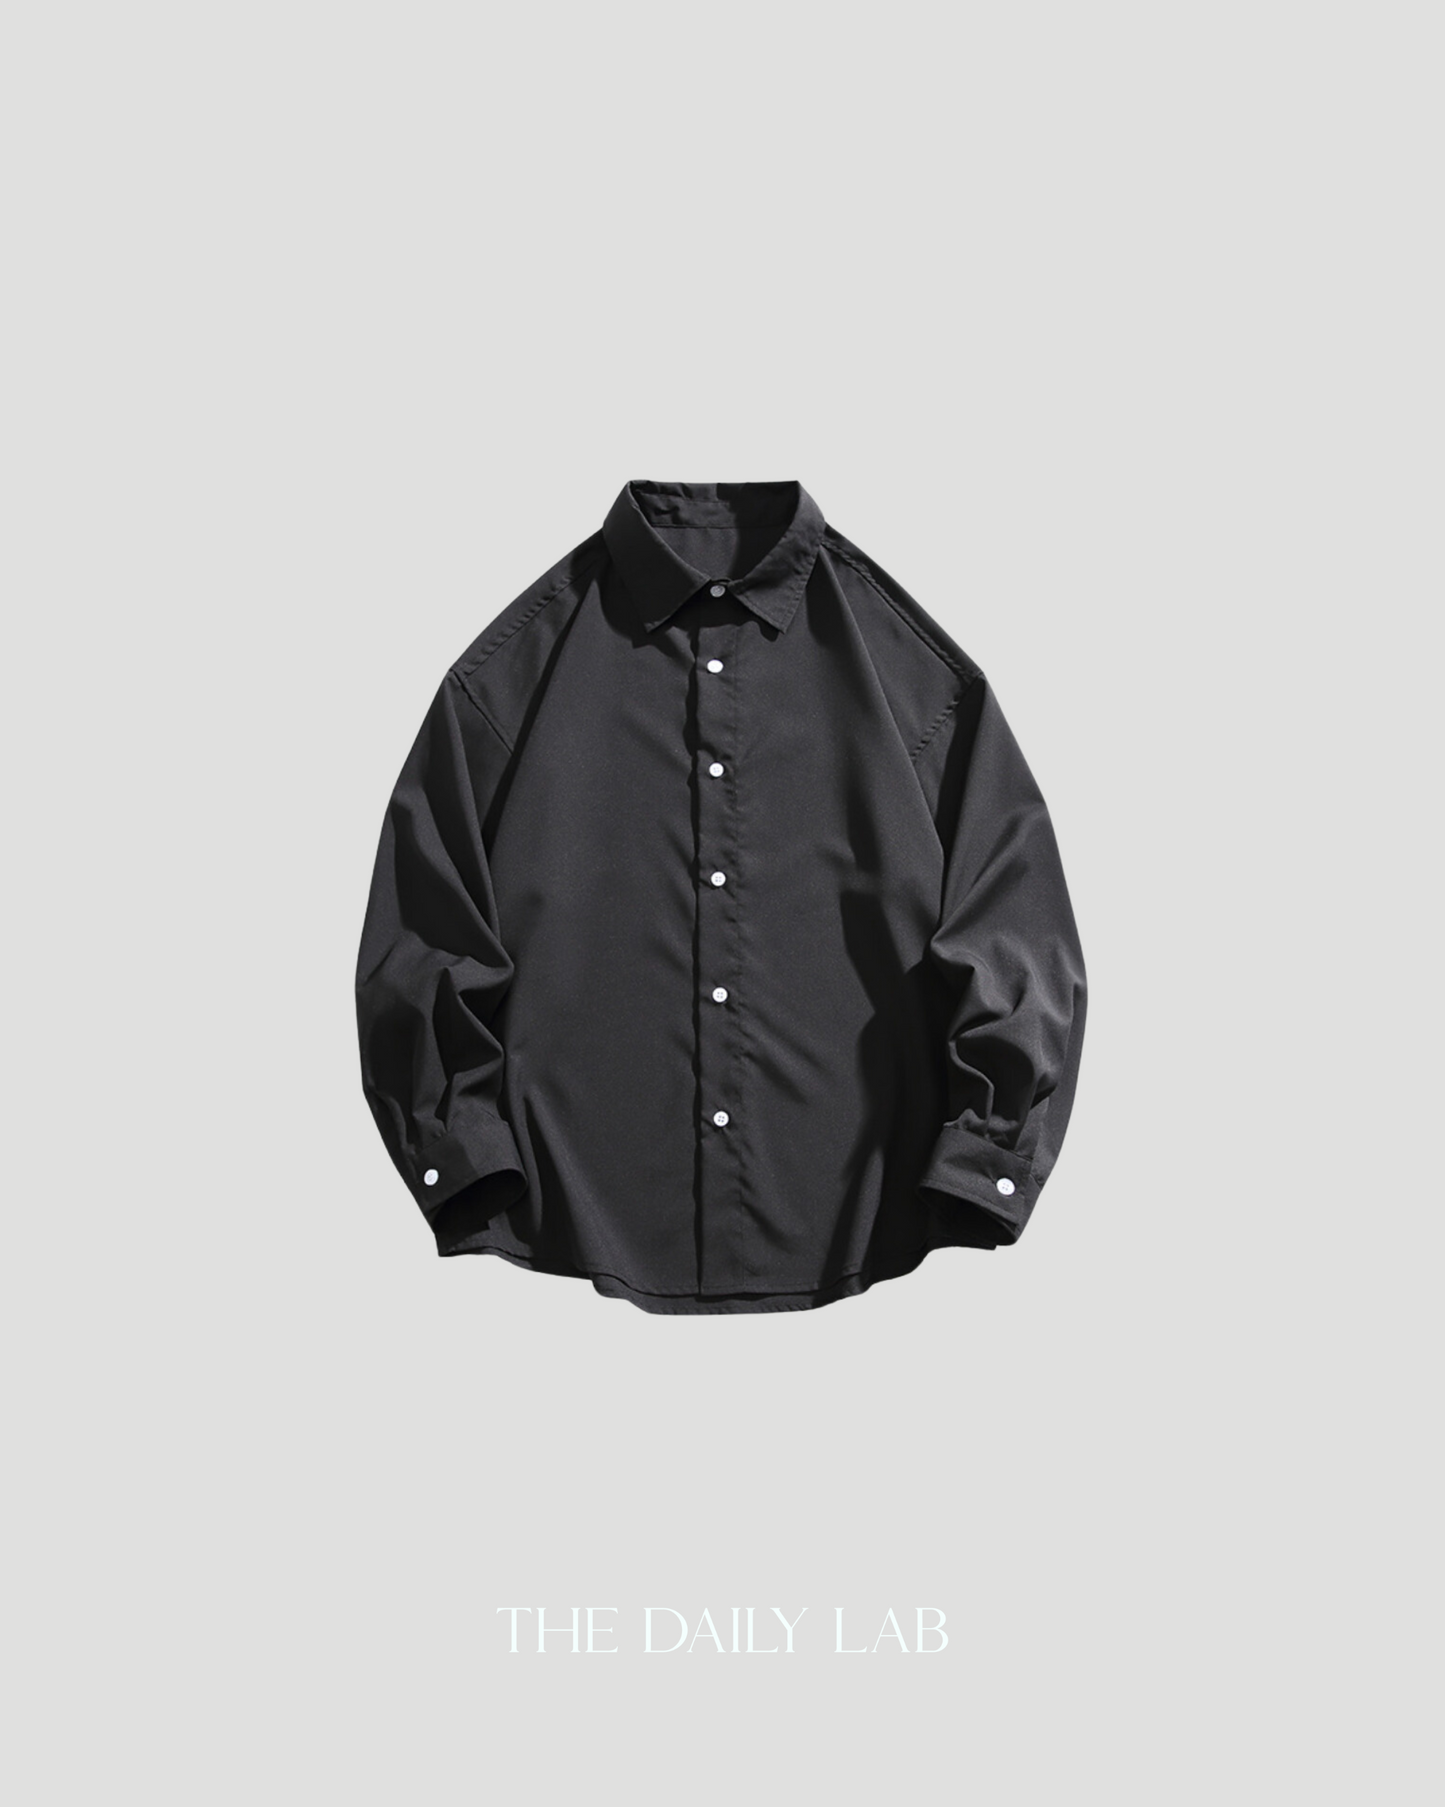 Urban Silk Swagger Shirt in Black